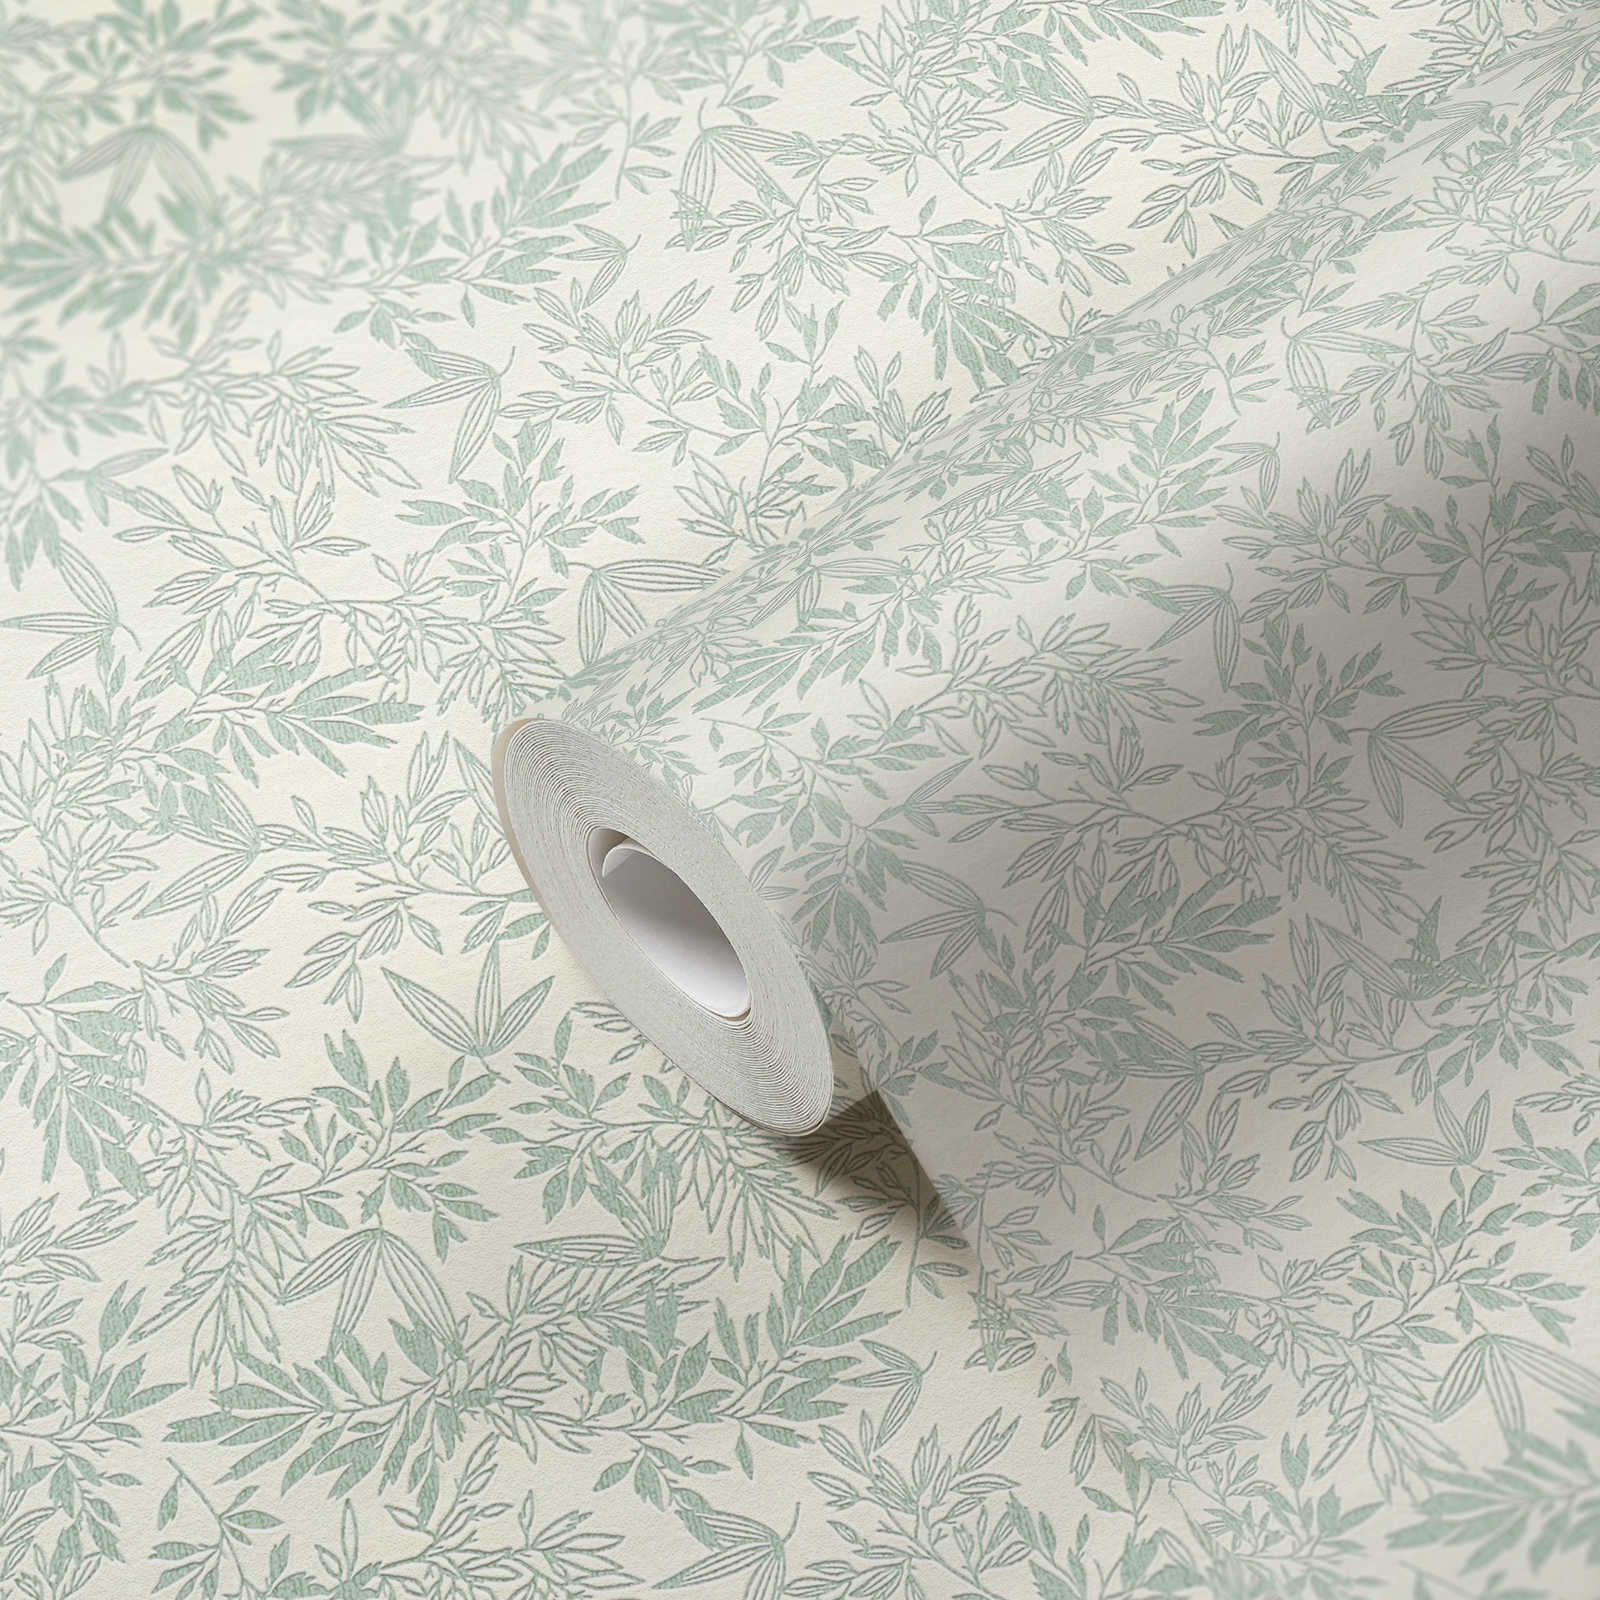             Papier peint intissé avec motif à grandes feuilles mat - vert, blanc
        